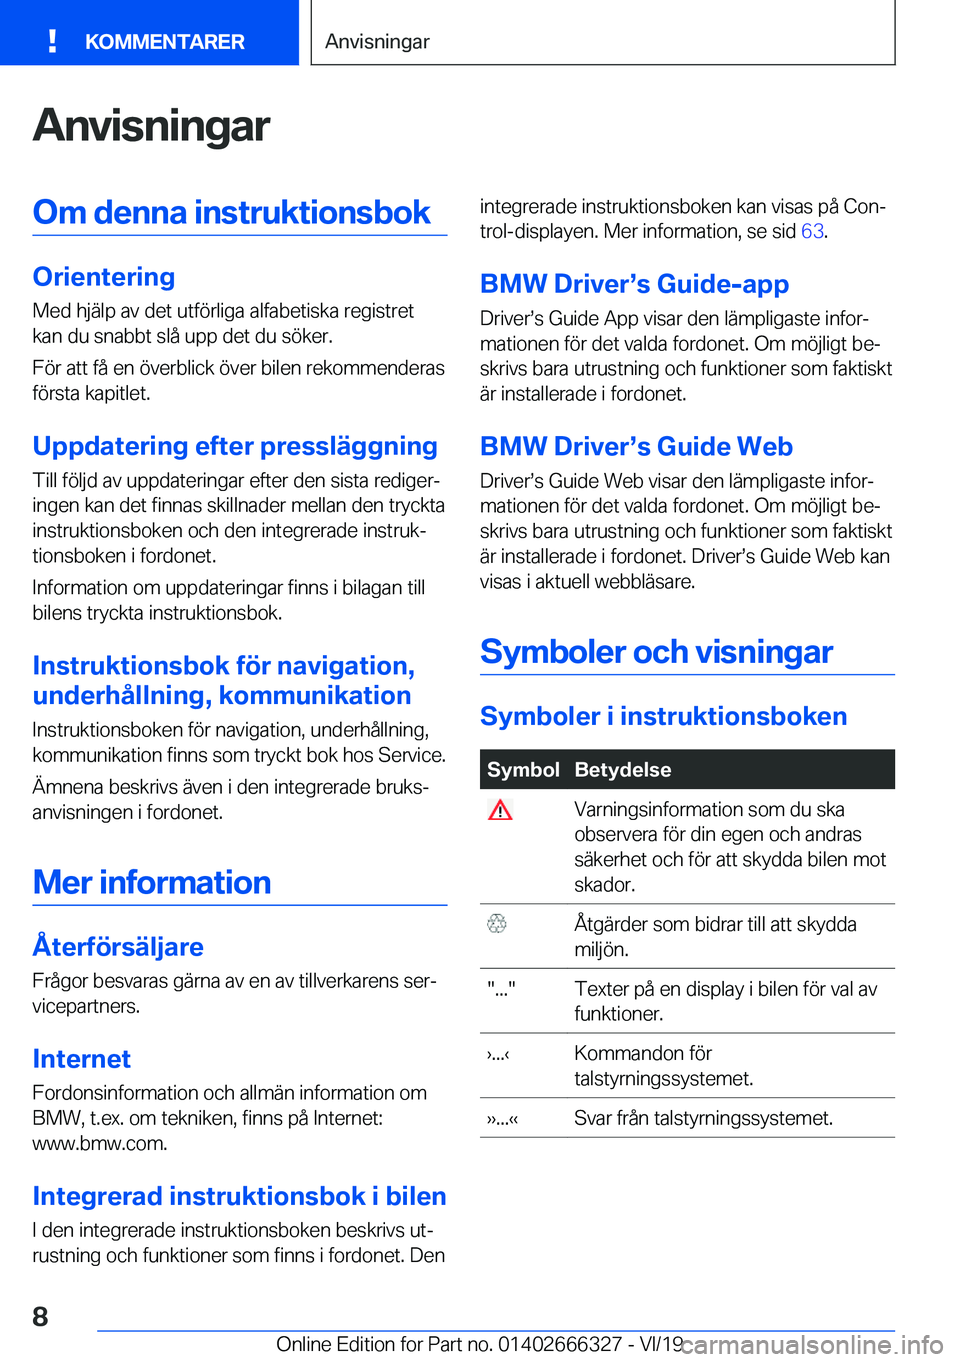 BMW 4 SERIES COUPE 2020  InstruktionsbÖcker (in Swedish) �A�n�v�i�s�n�i�n�g�a�r�O�m��d�e�n�n�a��i�n�s�t�r�u�k�t�i�o�n�s�b�o�k
�O�r�i�e�n�t�e�r�i�n�g
�M�e�d��h�j�ä�l�p��a�v��d�e�t��u�t�f�